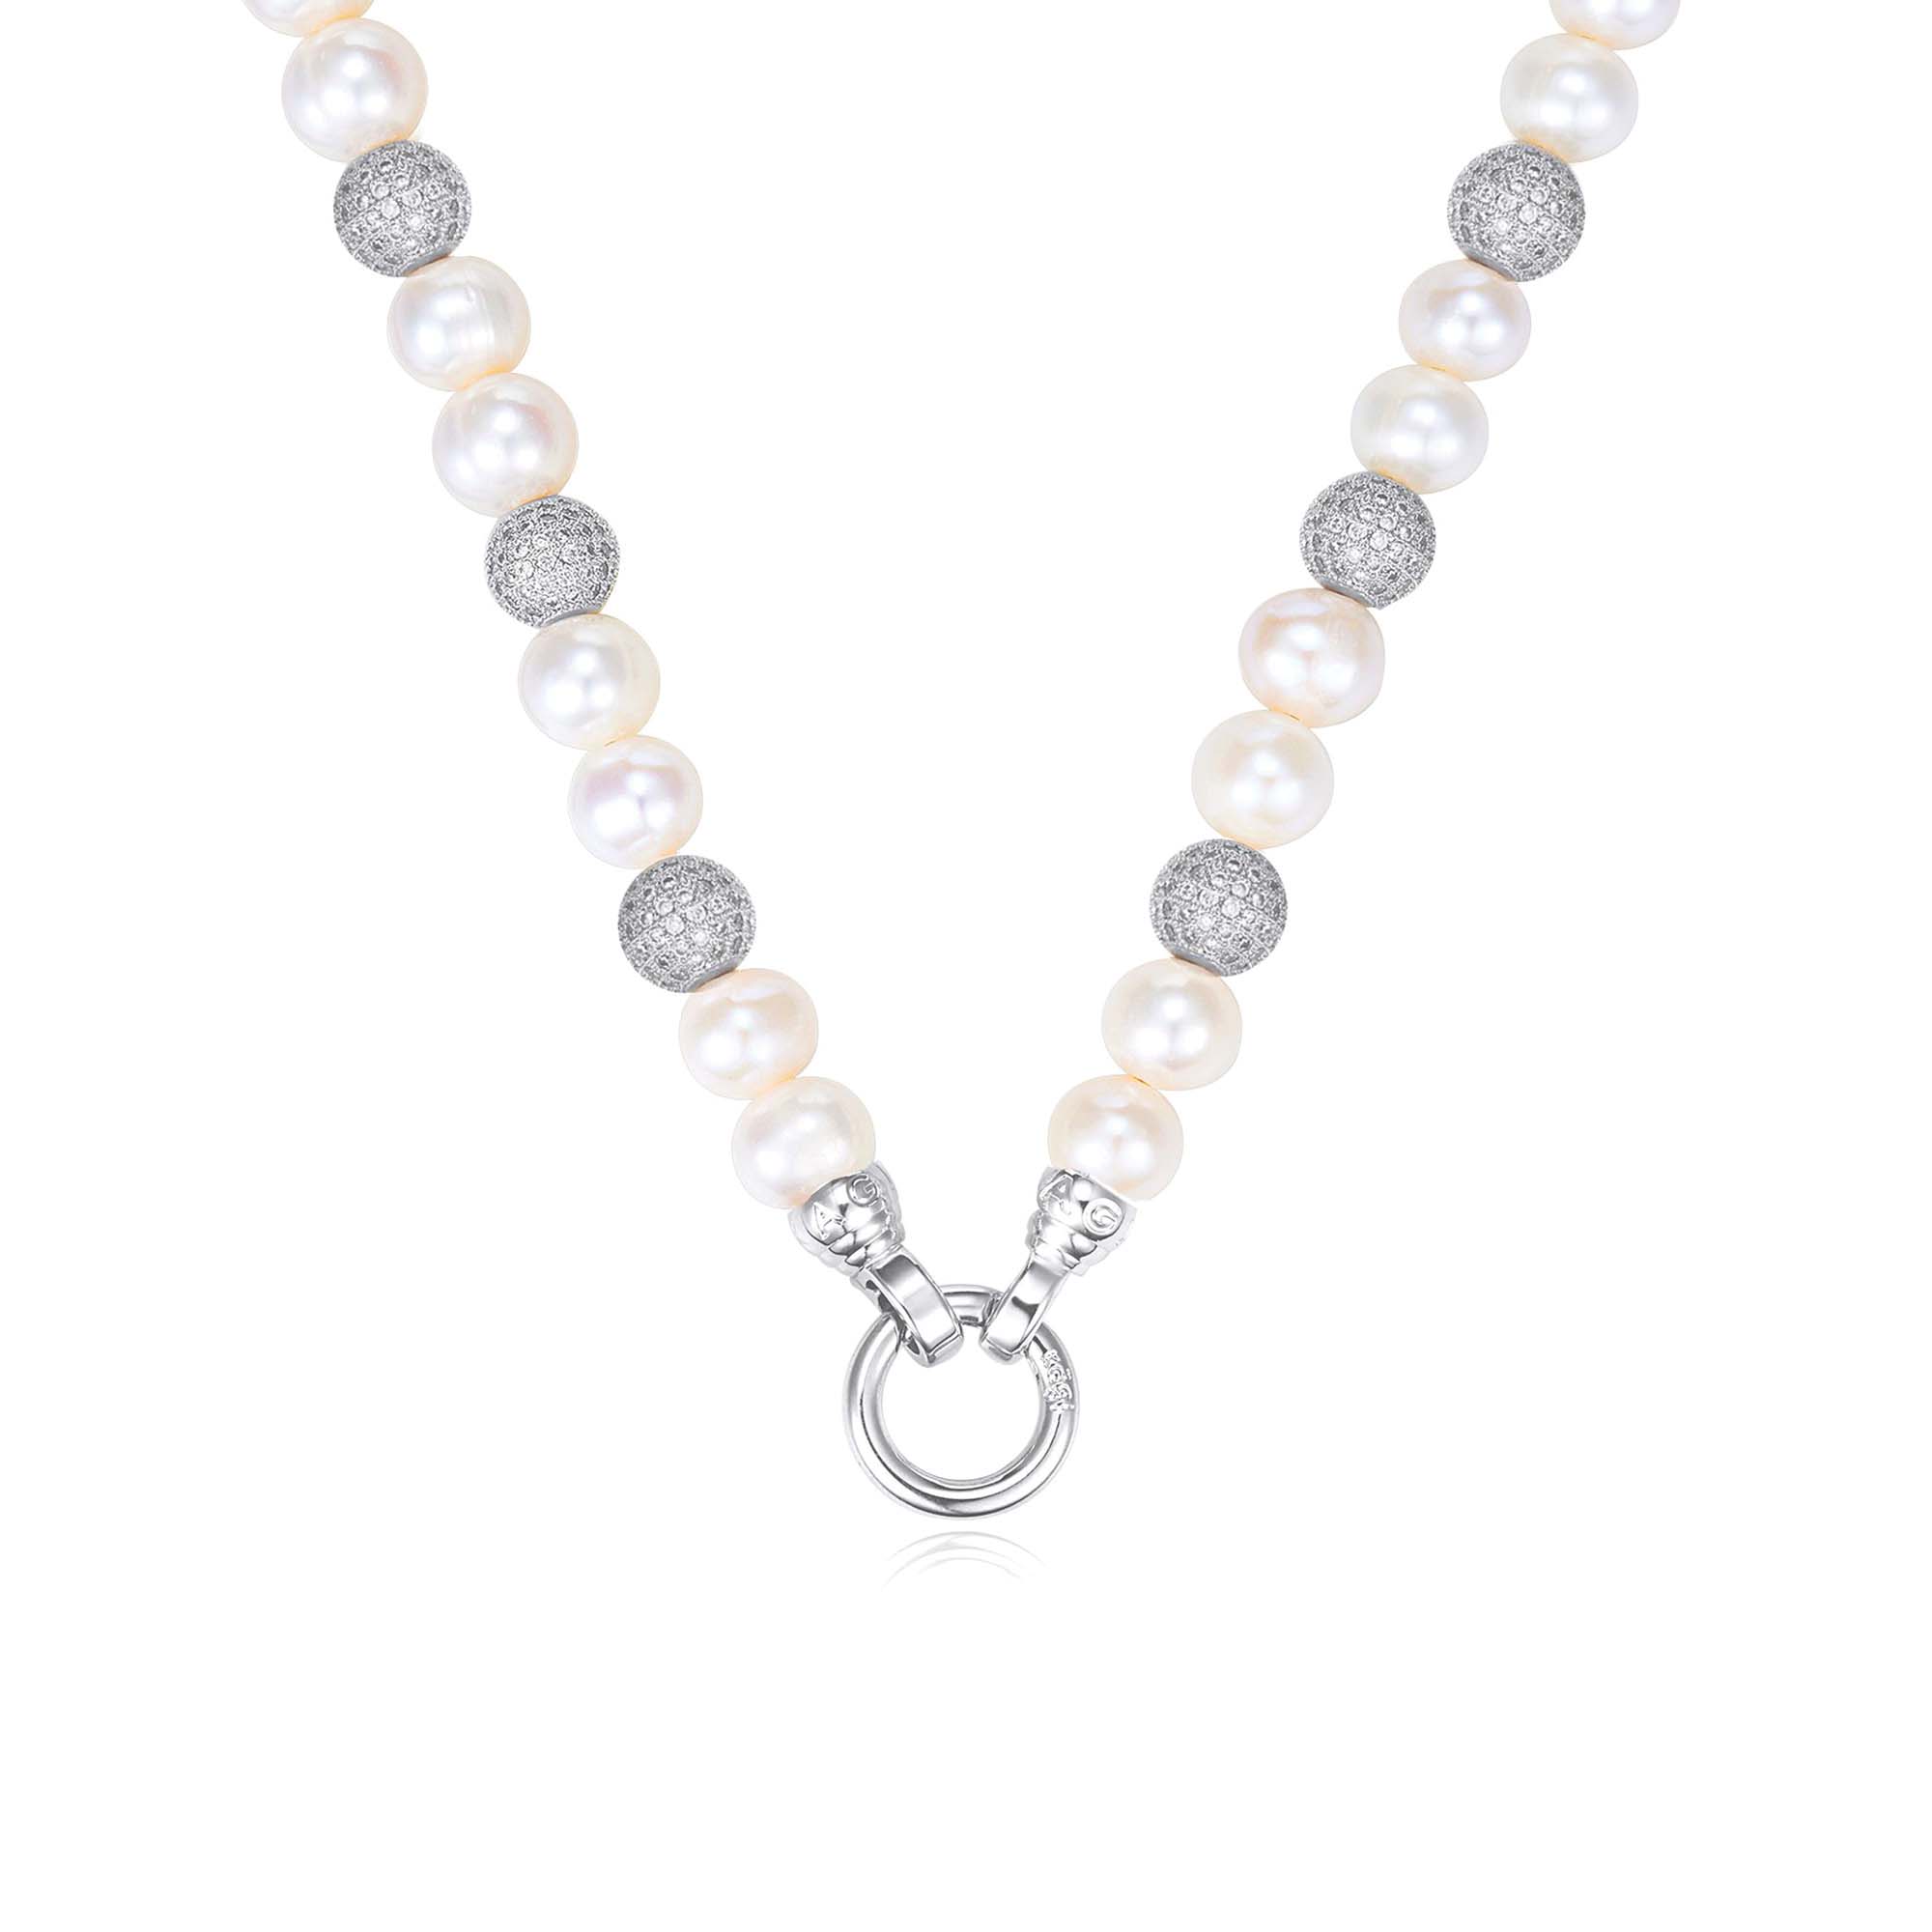 Kagi Pearl Luxe Necklace 49cm $249 www.kagi.net